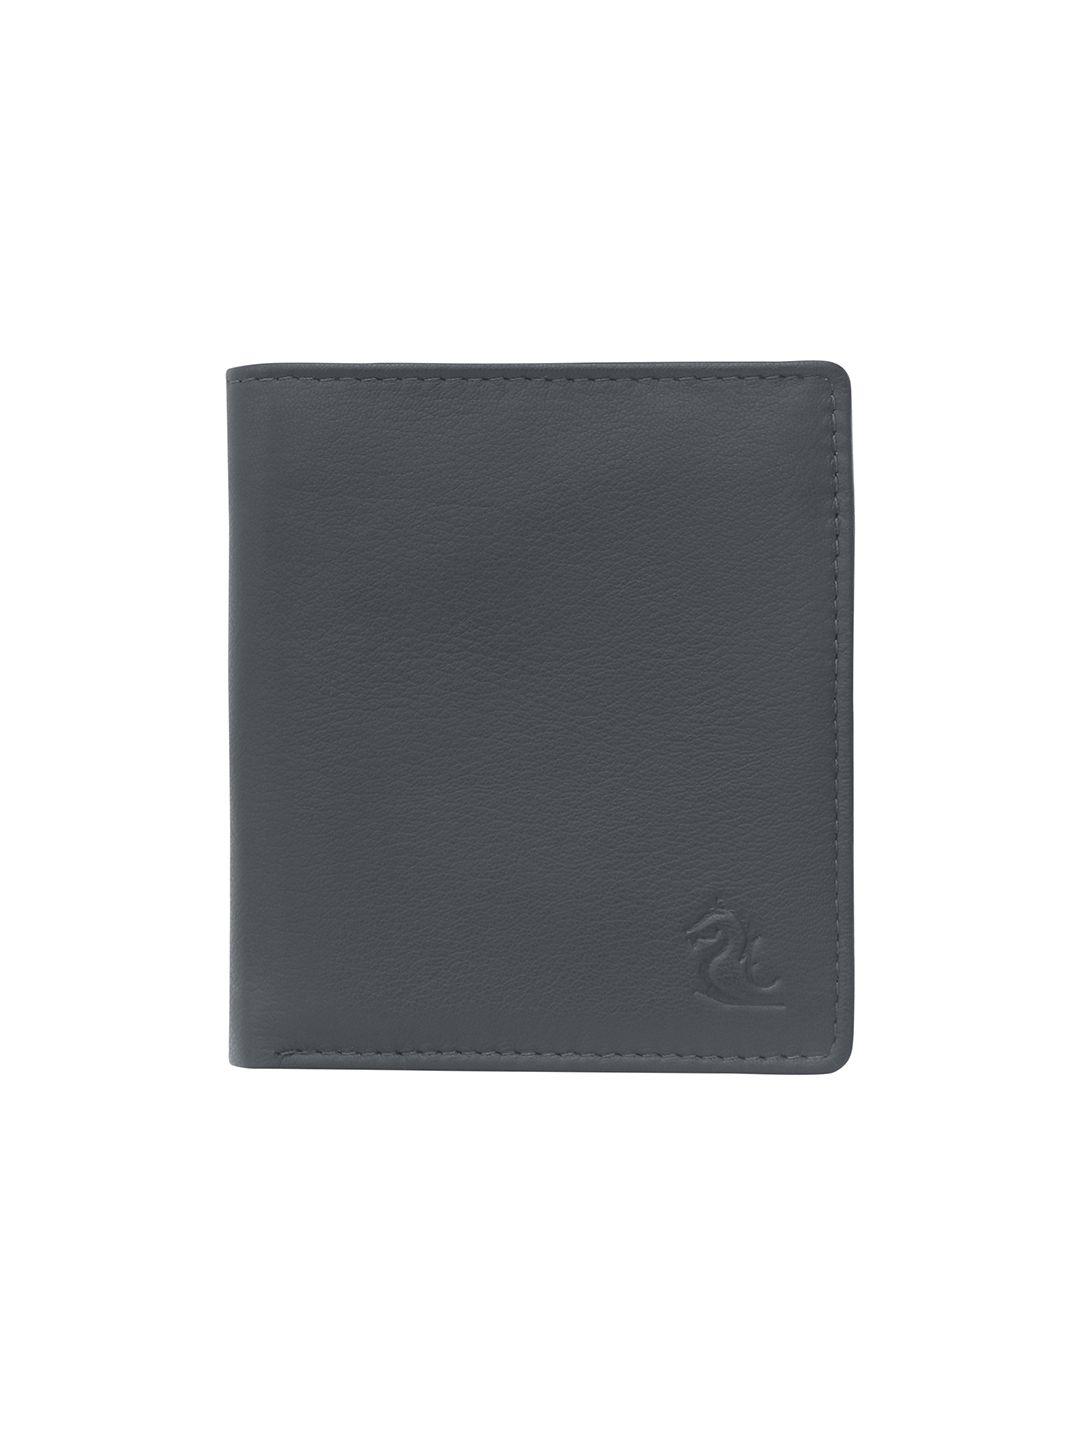 kara-men-black-textured-leather-two-fold-wallet